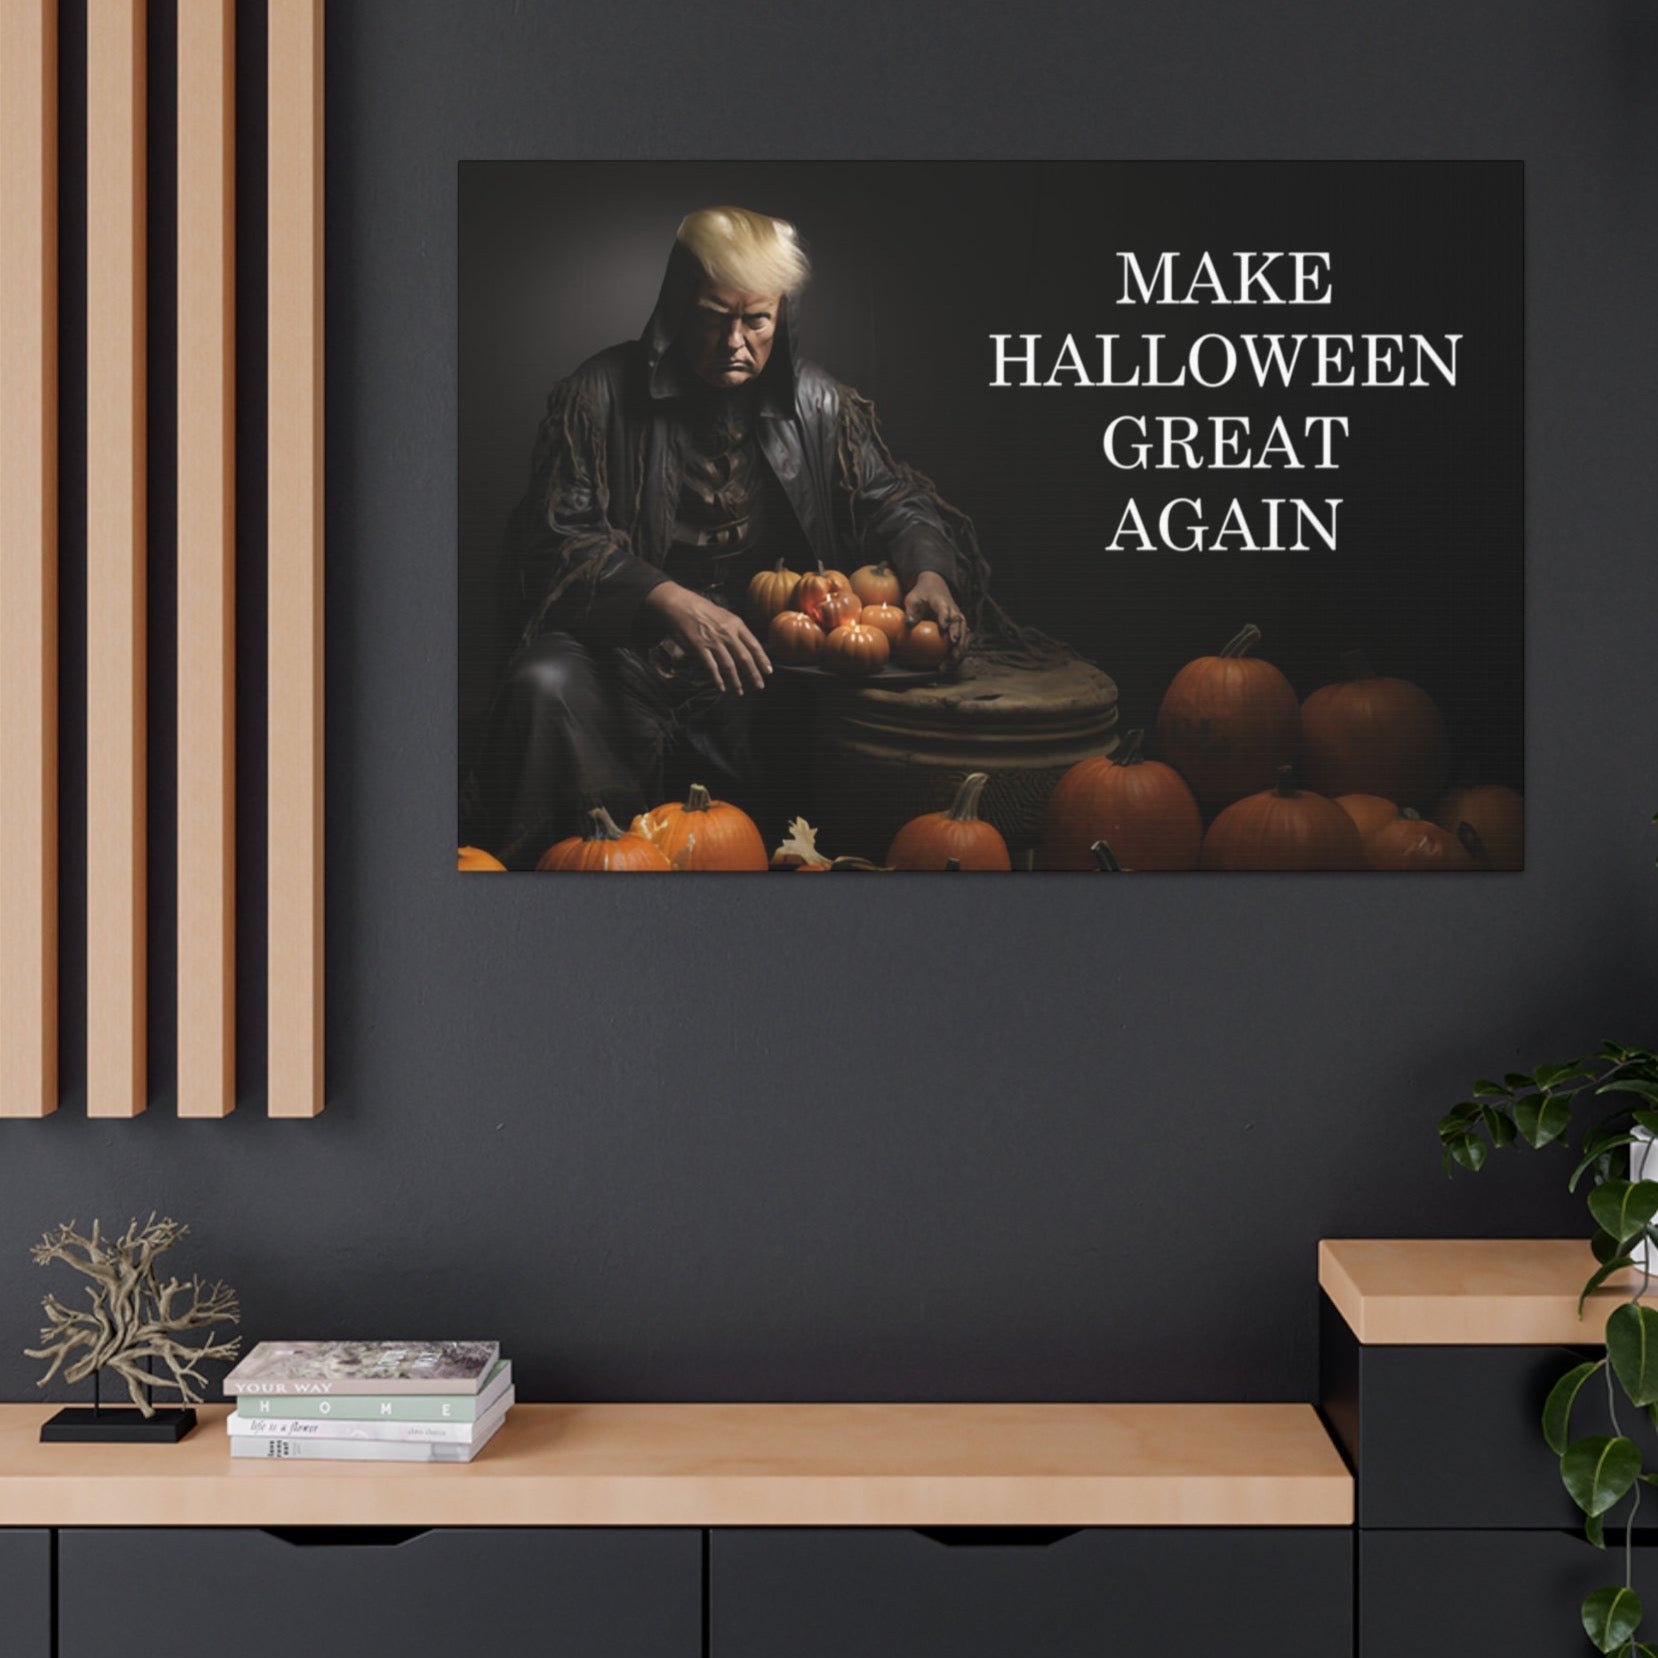 Donald Trump humorous Halloween art decor